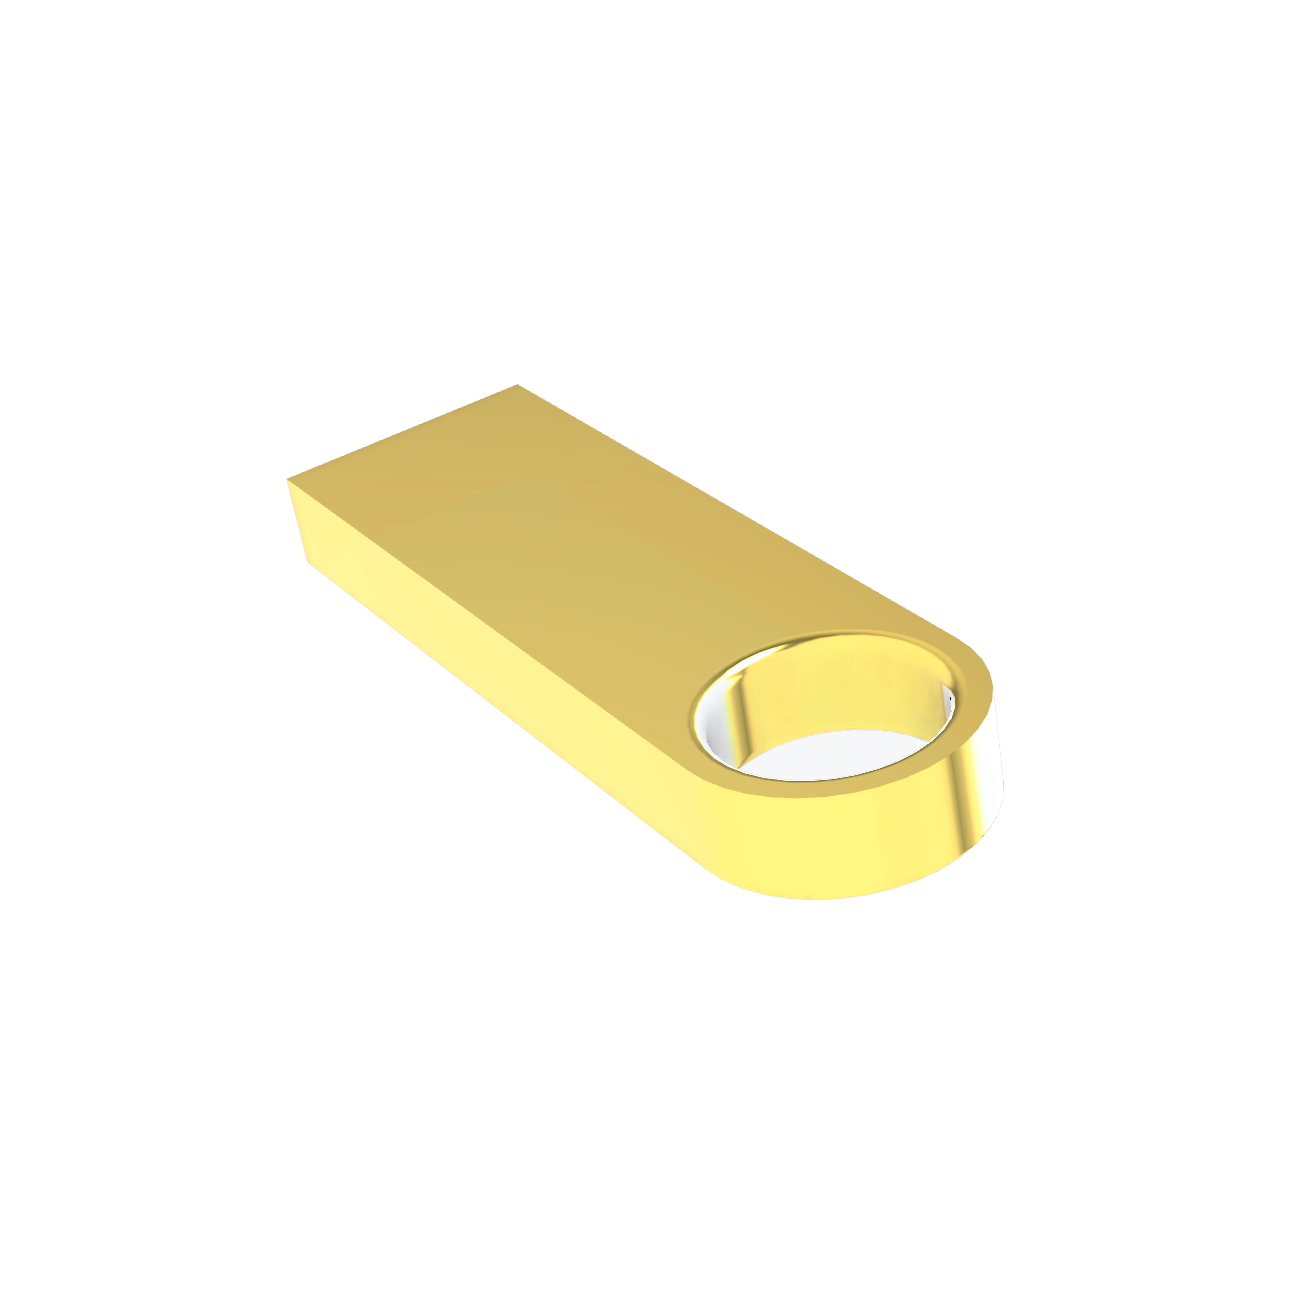 USB 1 (Gold, GB) GERMANY SE09 USB-Stick ®